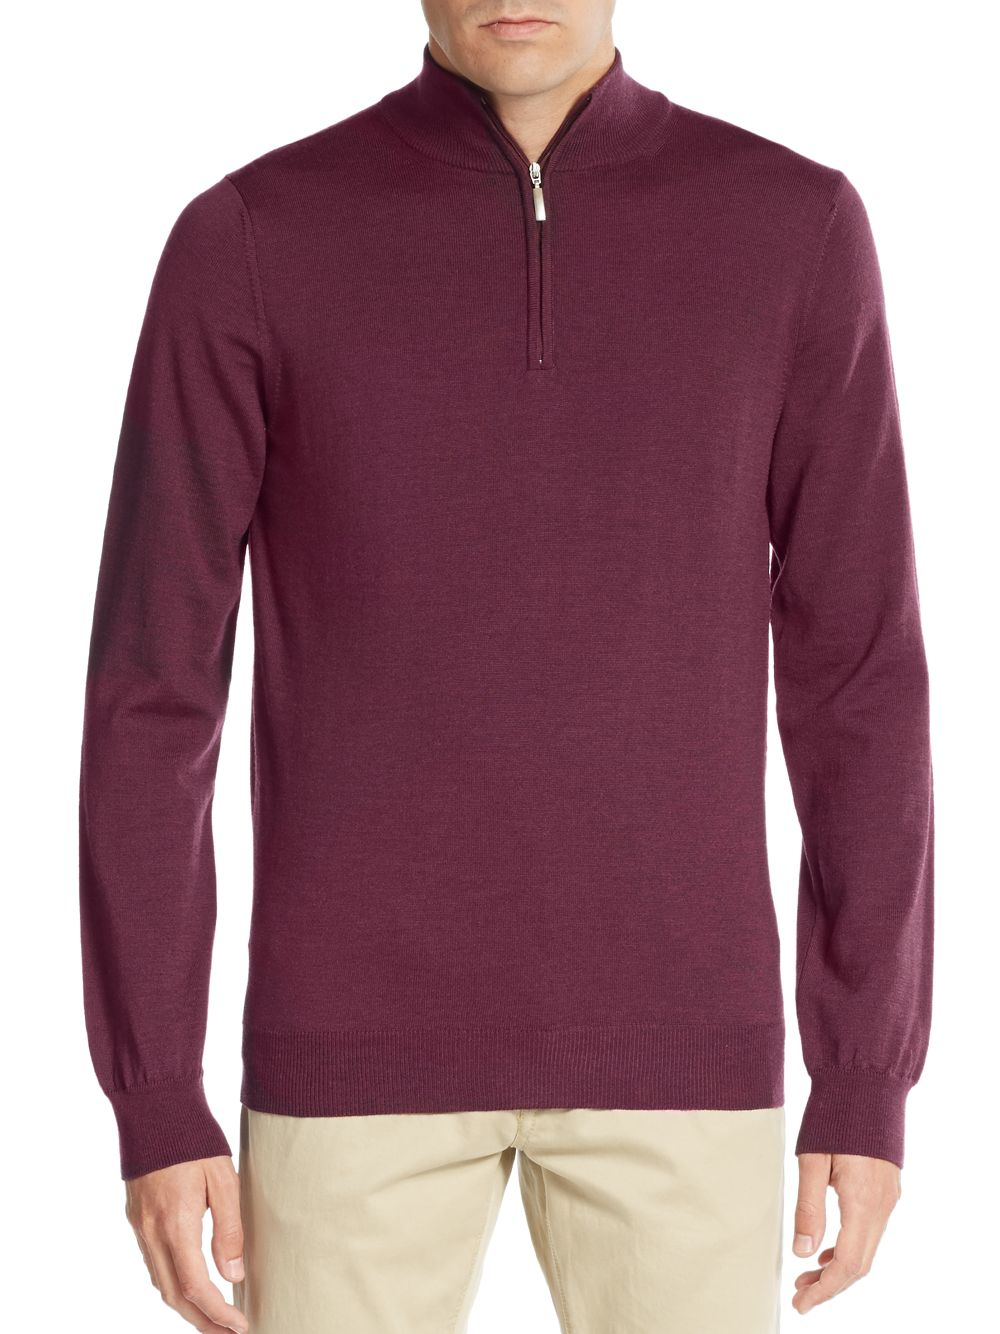 Lyst - Saks fifth avenue Merino Wool Half-zip Sweater in Purple for Men